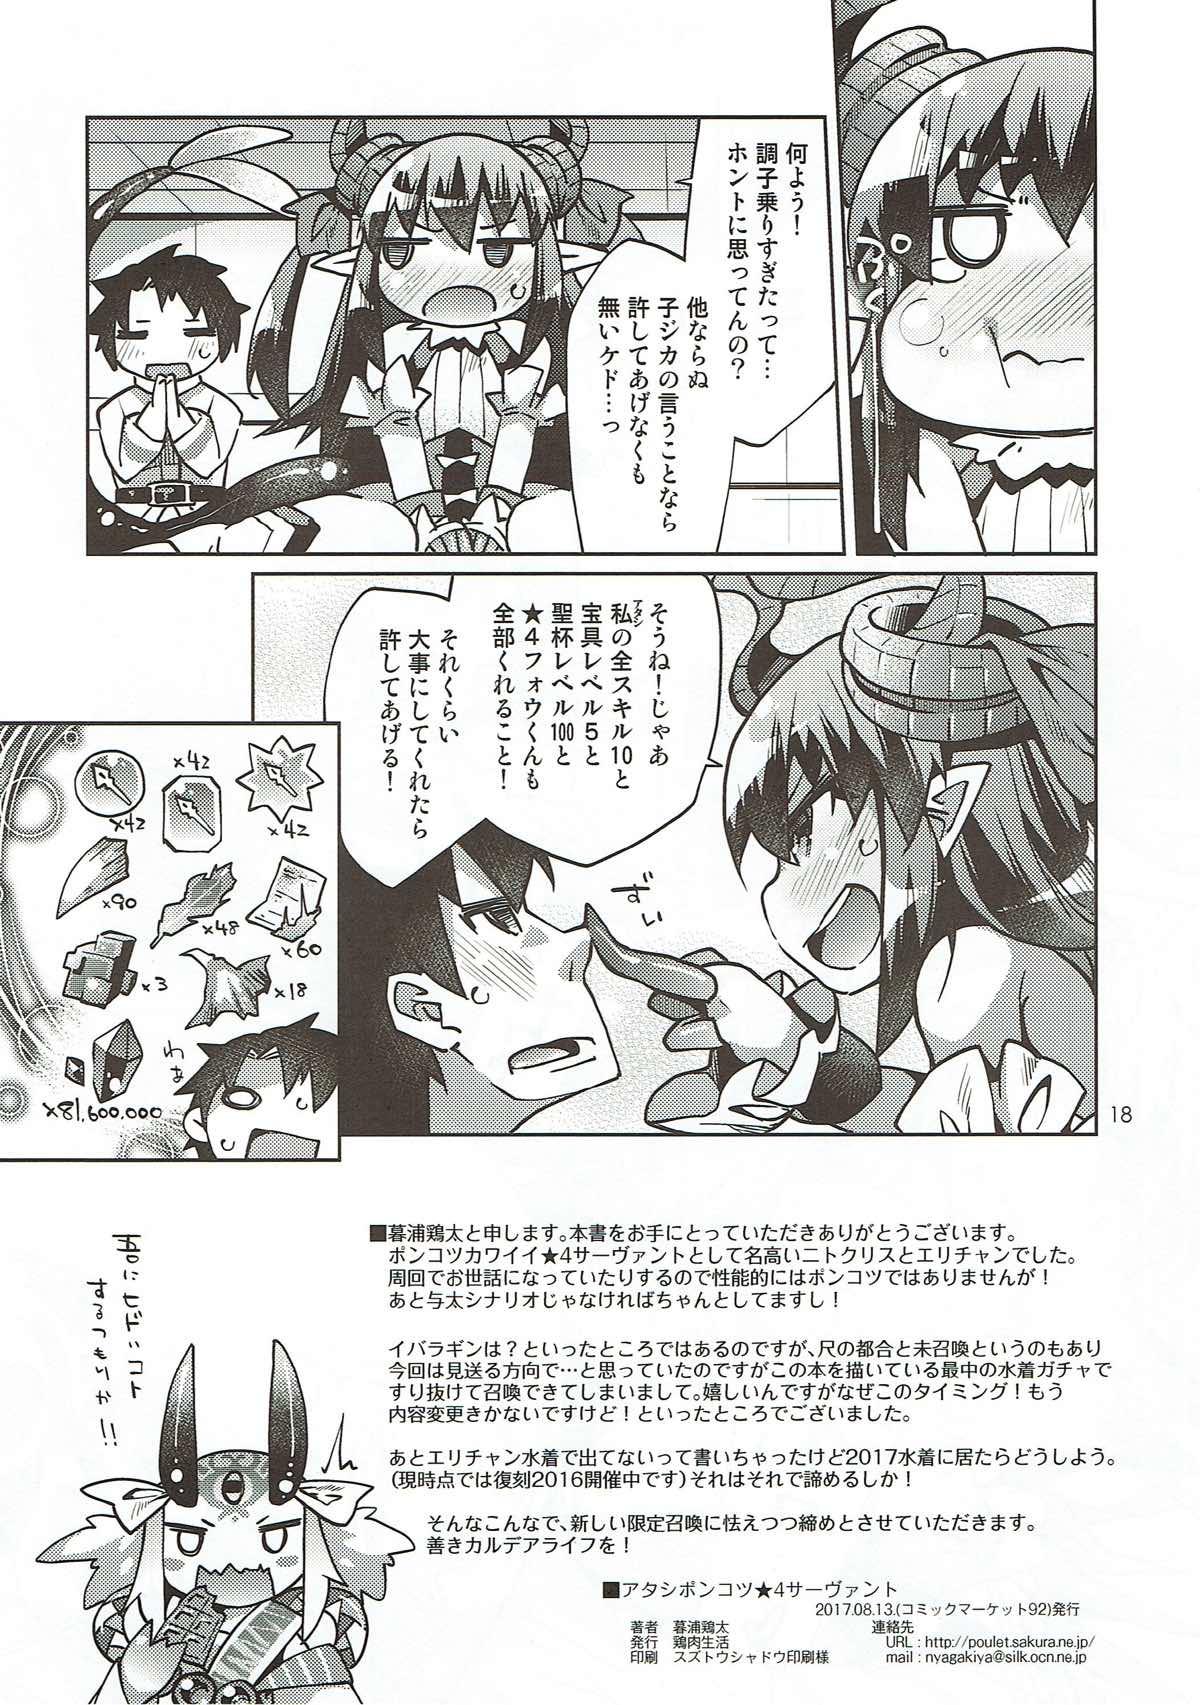 Lovers Atashi Ponkotsu SR Servant - Fate grand order Panty - Page 17